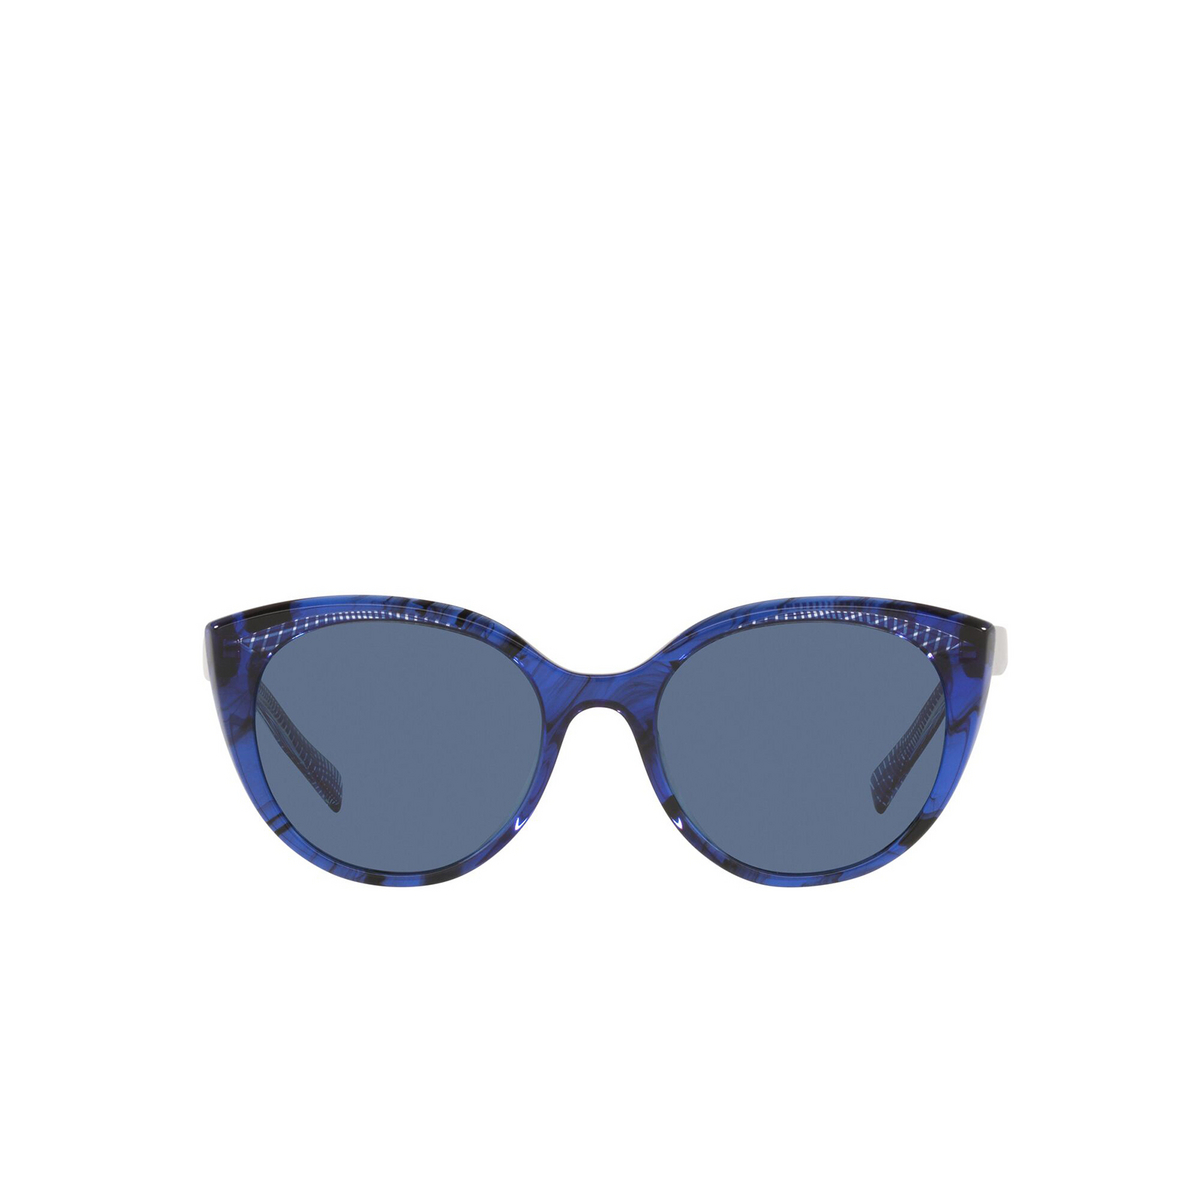 Alain Mikli® Cat-eye Sunglasses: Elinetta Sun A05066 color Fluid Blue / Blue Crystal 001/80 - front view.